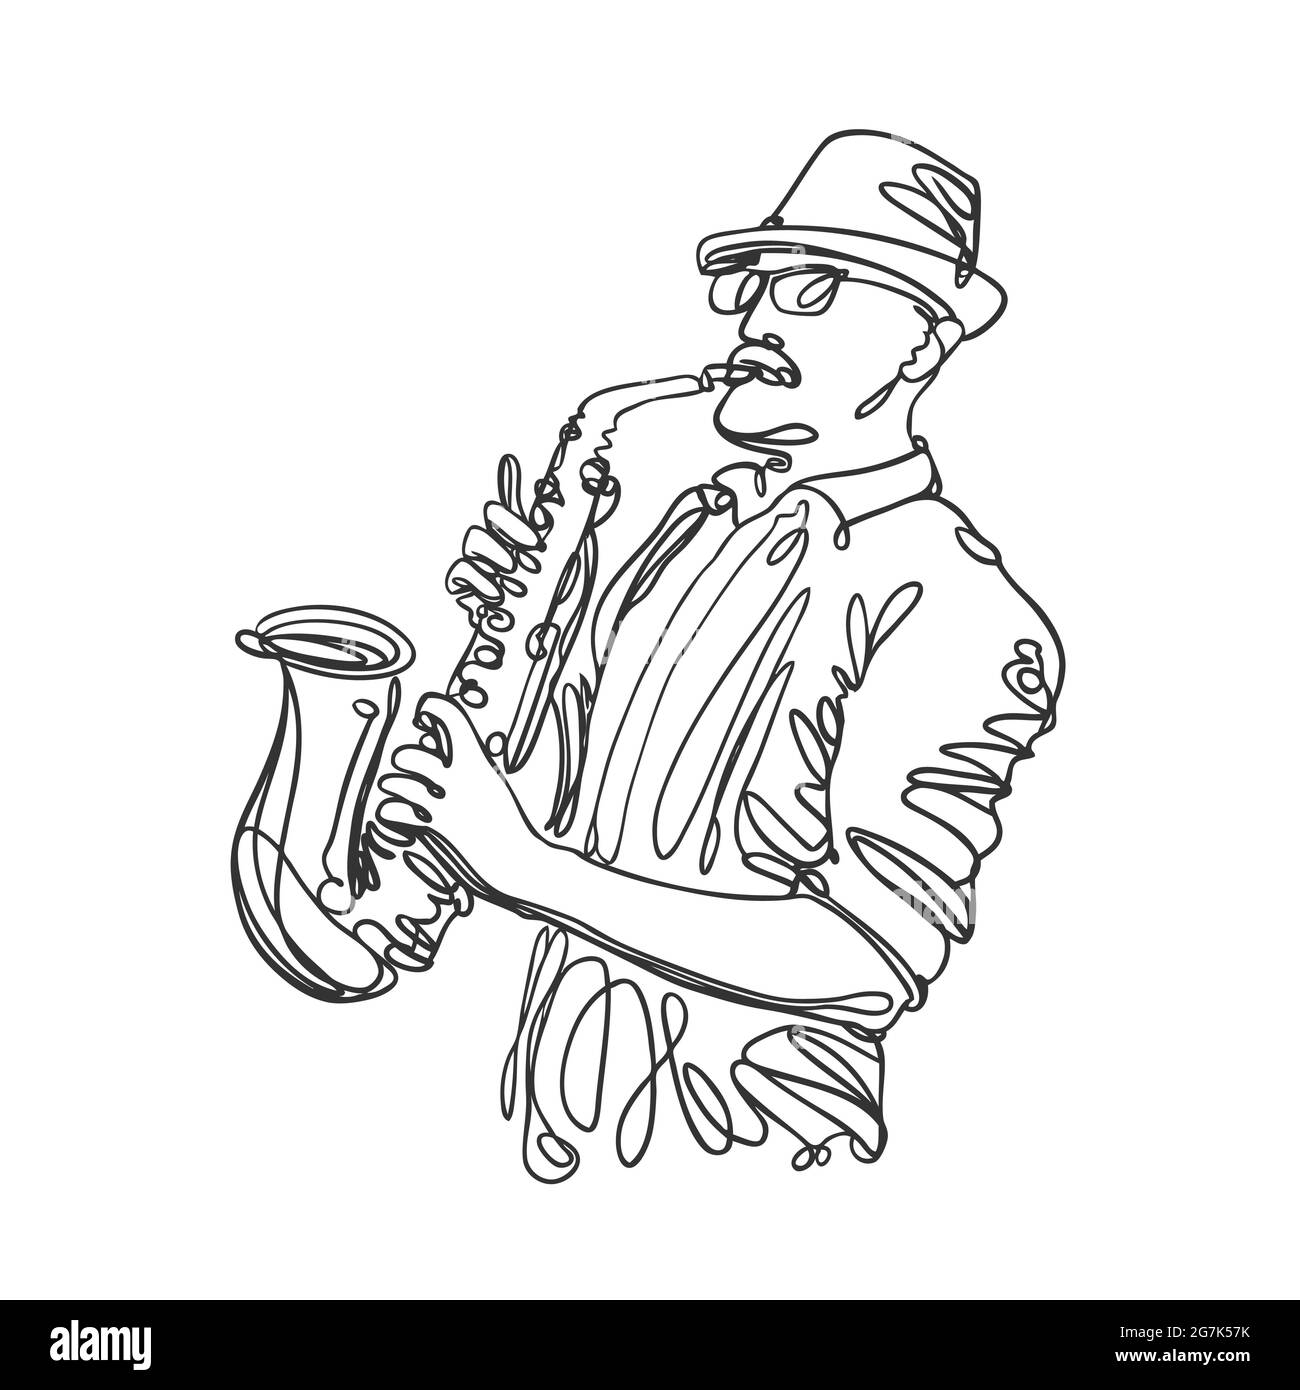 Jazz-Saxophonist im linearen Stil. Vektorgrafik für Musikkonzepte Stock Vektor